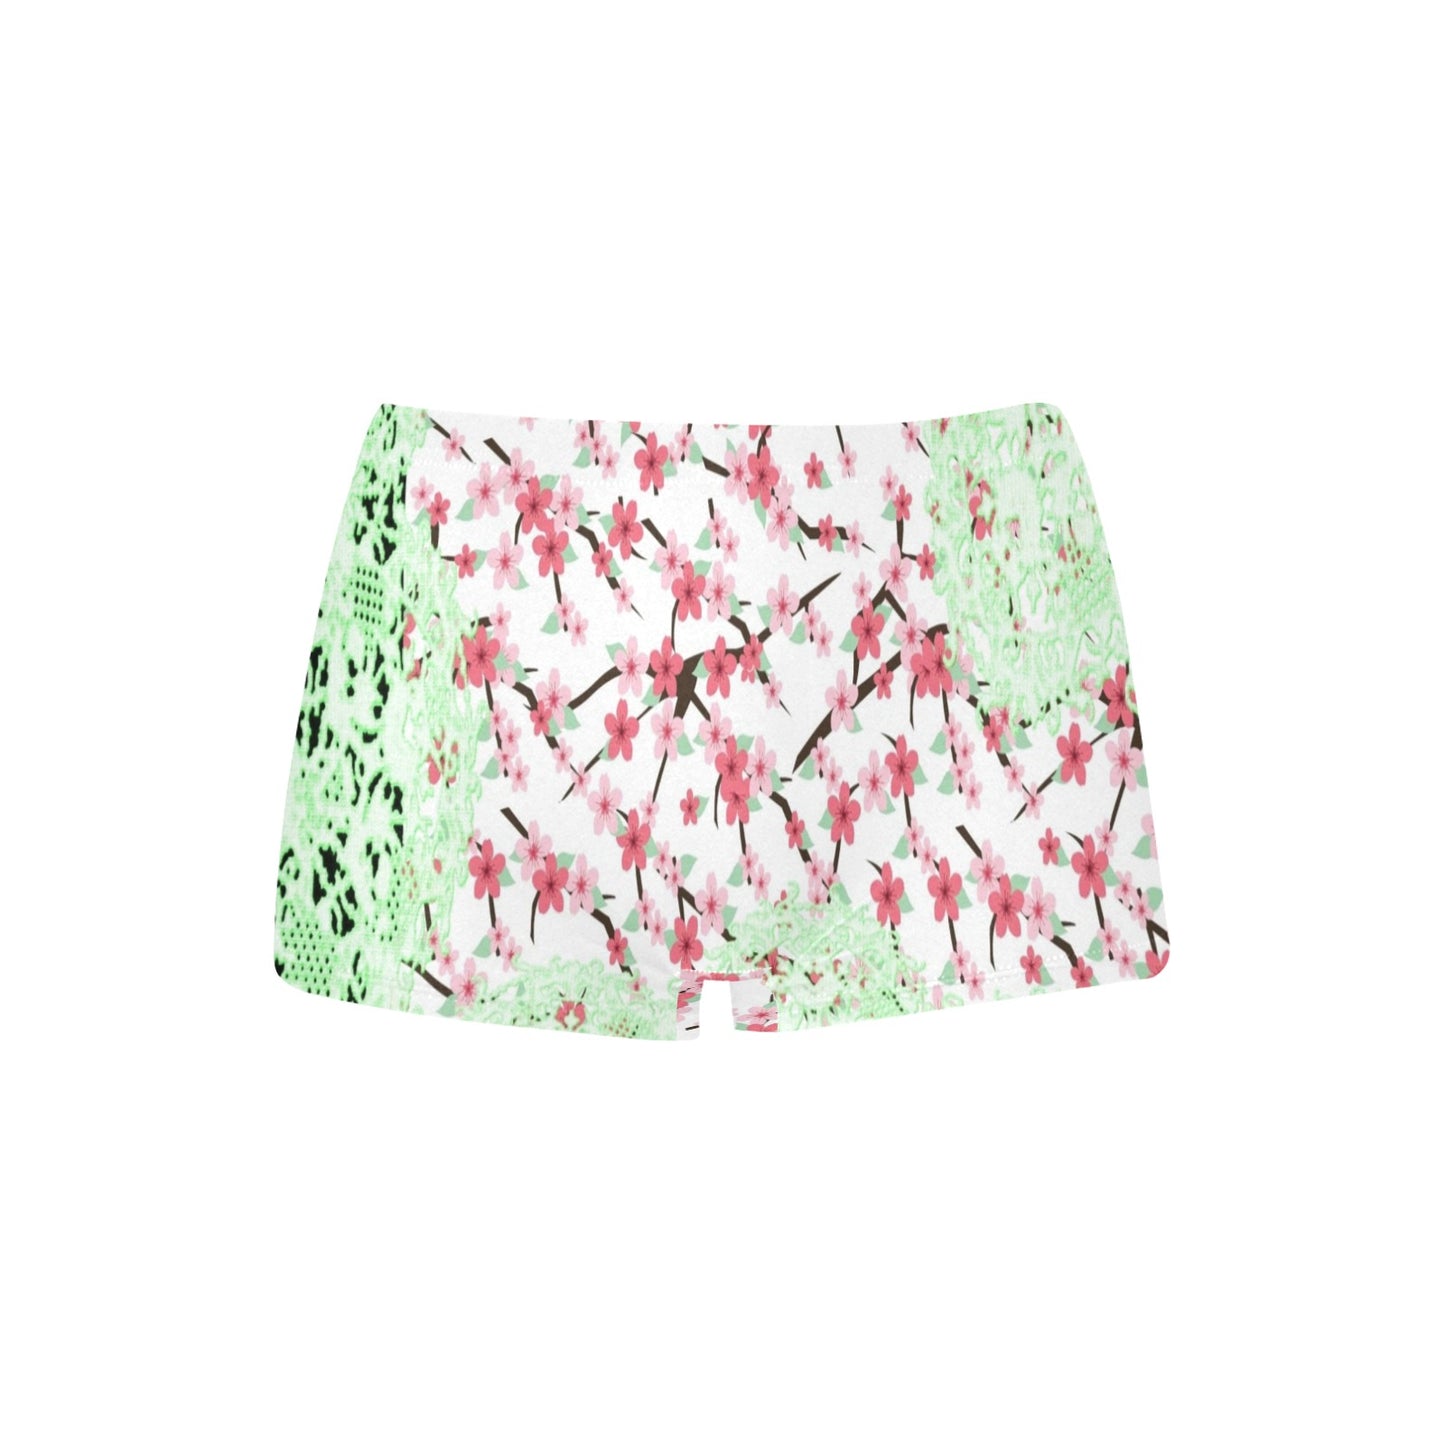 Printed Lace Boyshorts, daisy dukes, pum pum shorts, shortie shorts , design 10